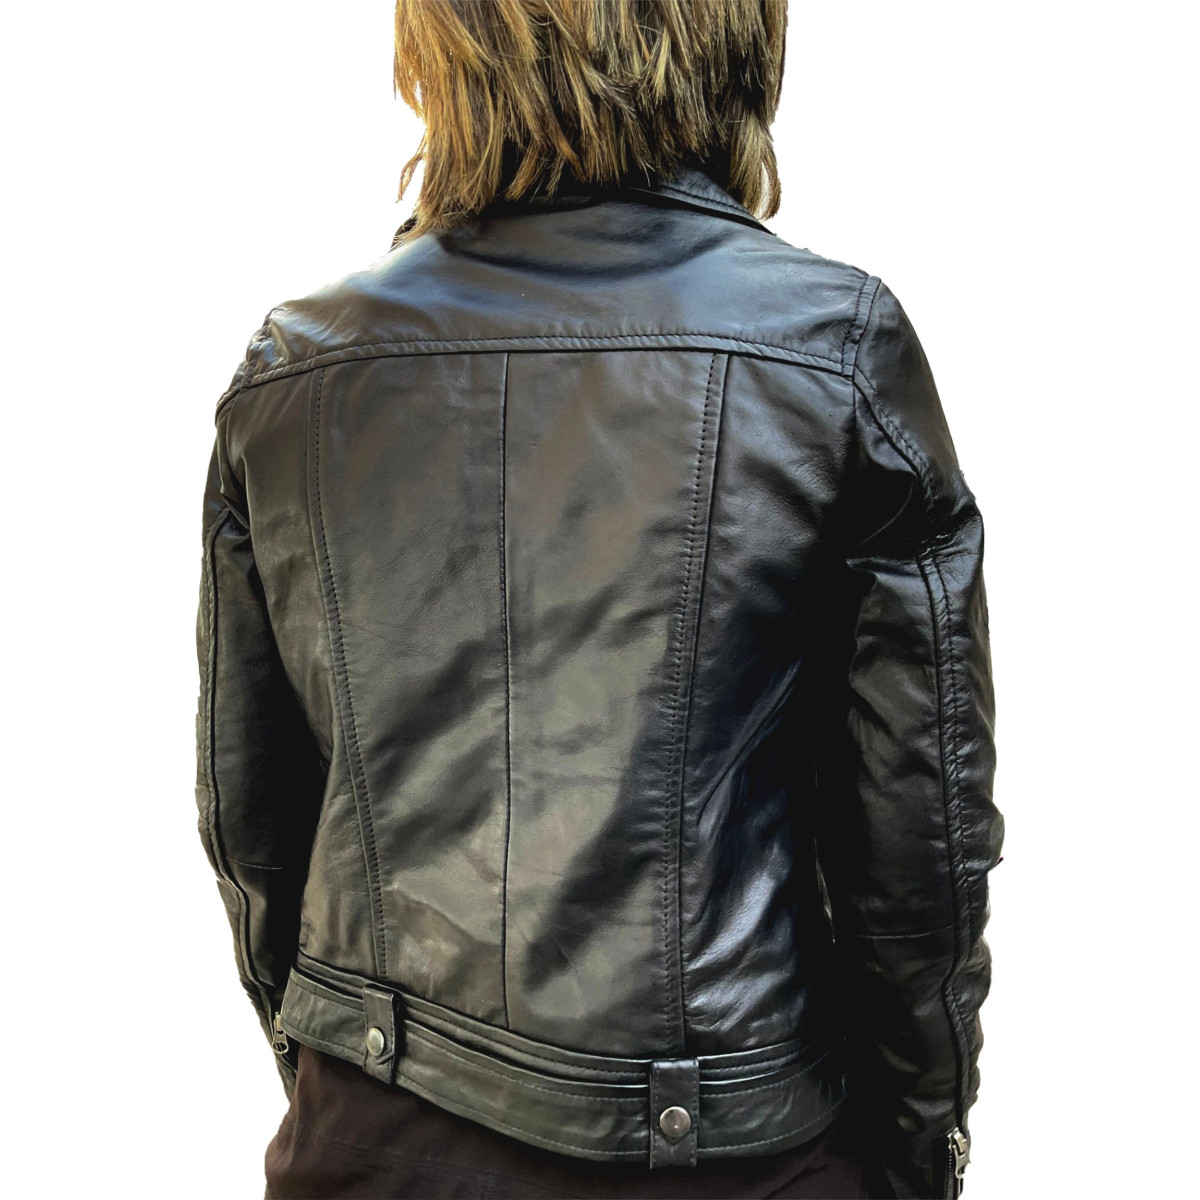 Black Leather Jacket AM-219 GEROME